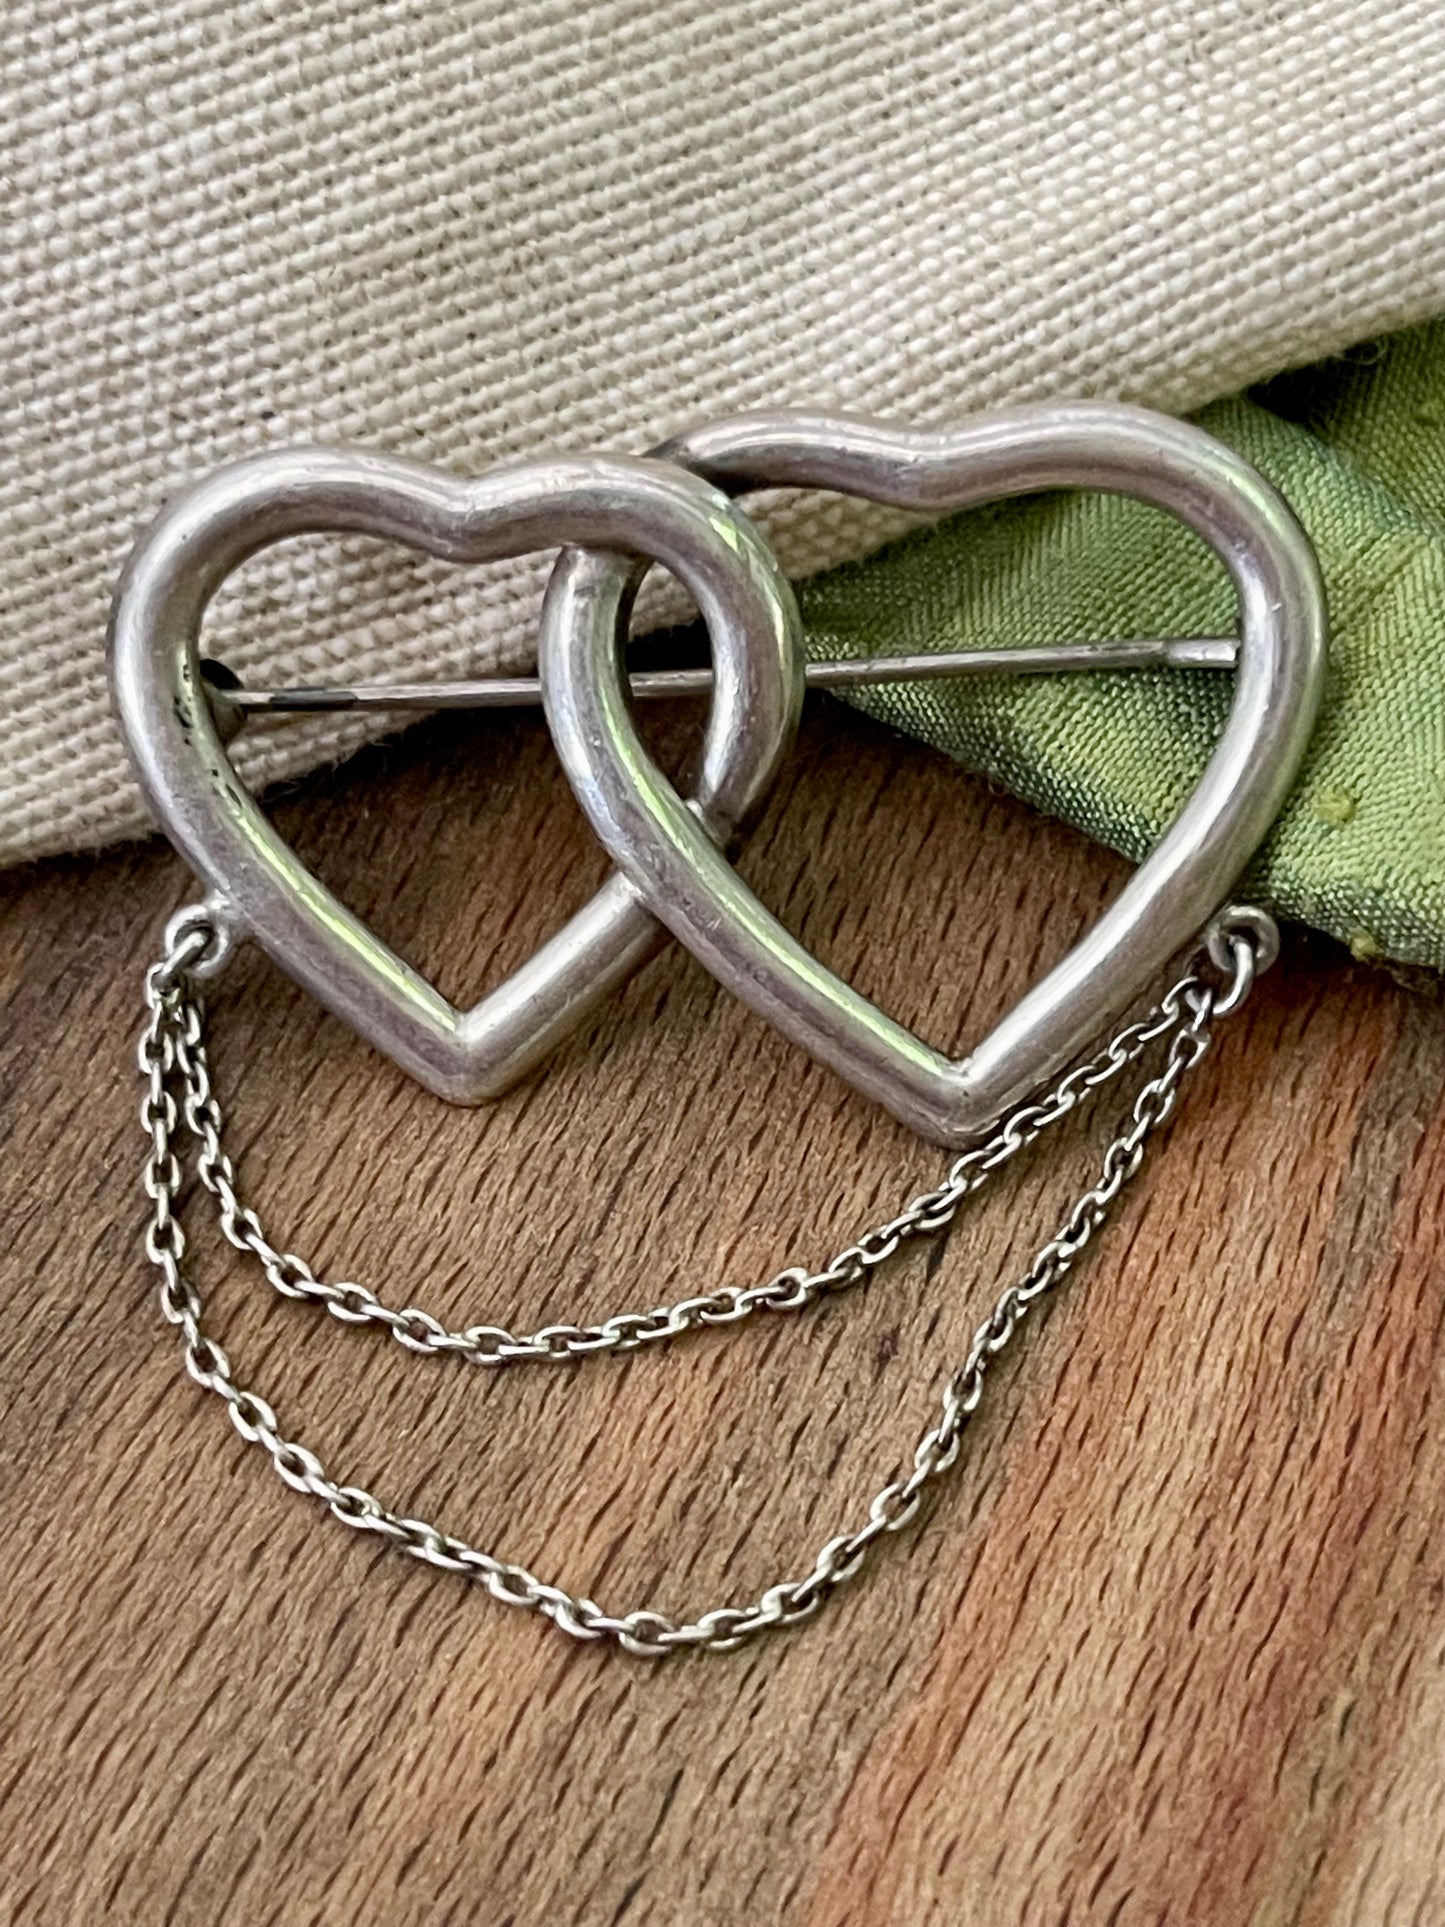 Pair of Interlinked Hearts Brooch Sterling 925 Silver Vintage Retro Jewellery